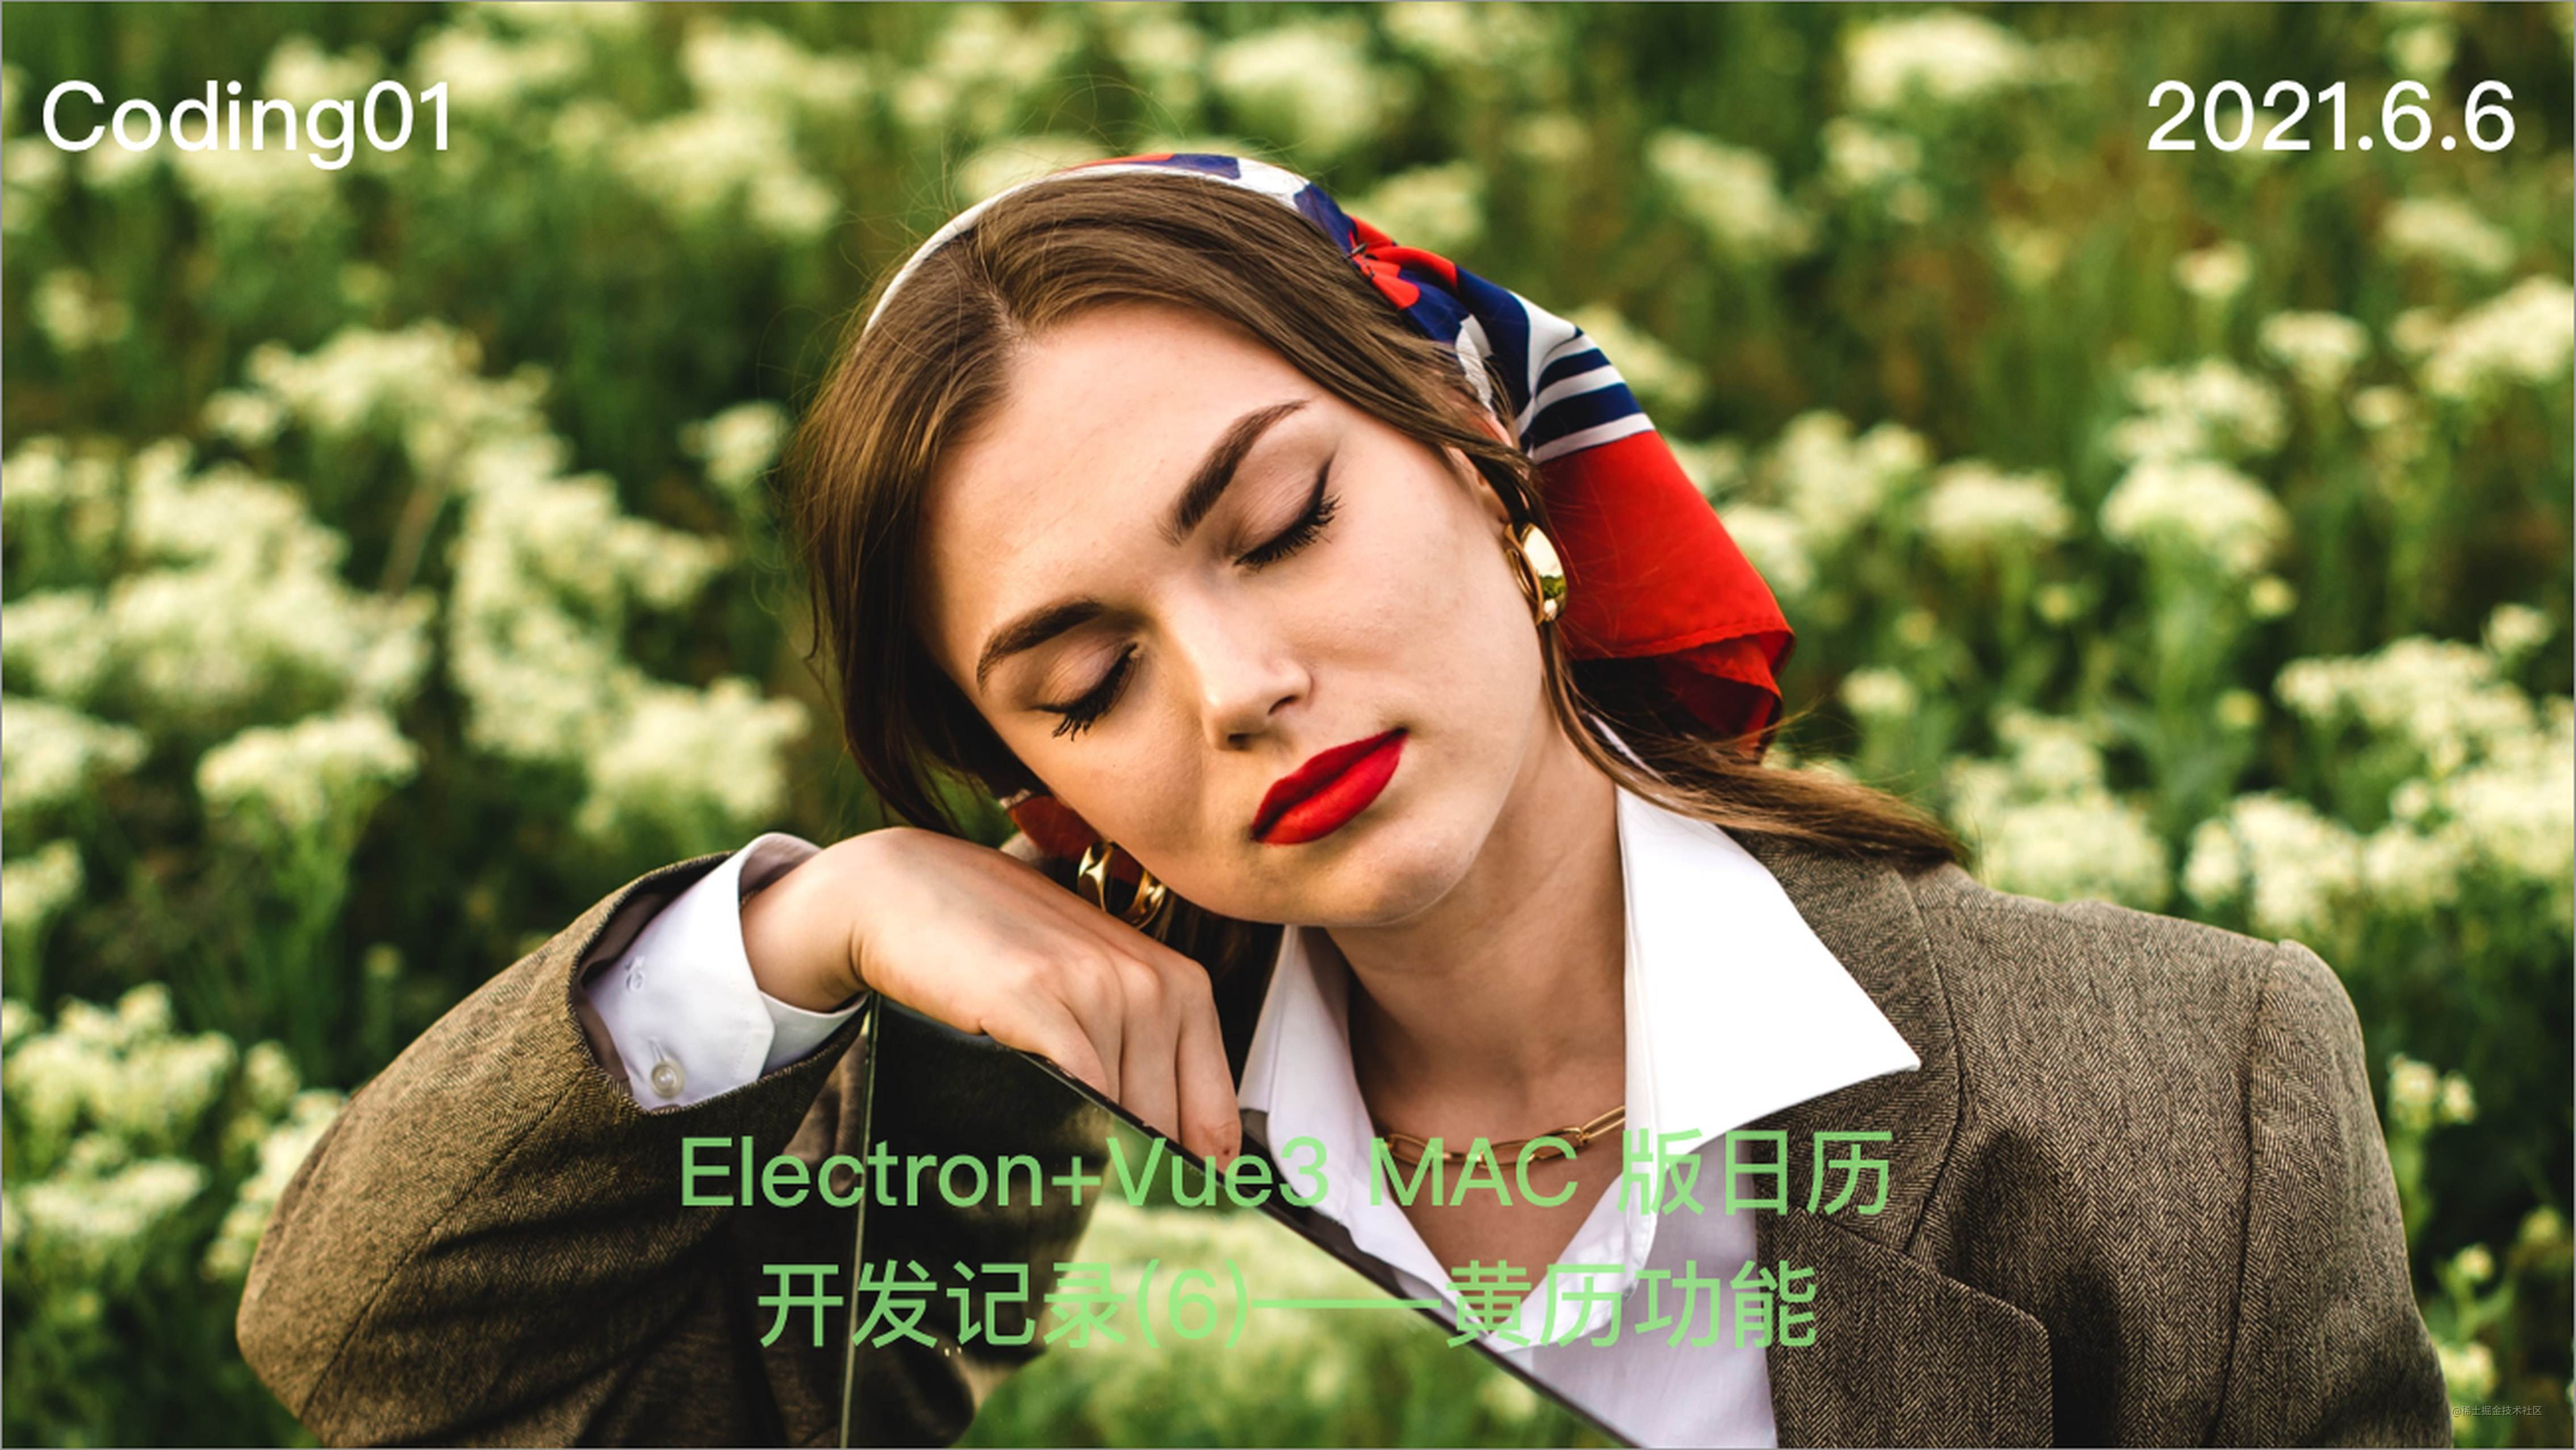 Electron+Vue3 MAC 版日历 开发记录(6)——黄历功能